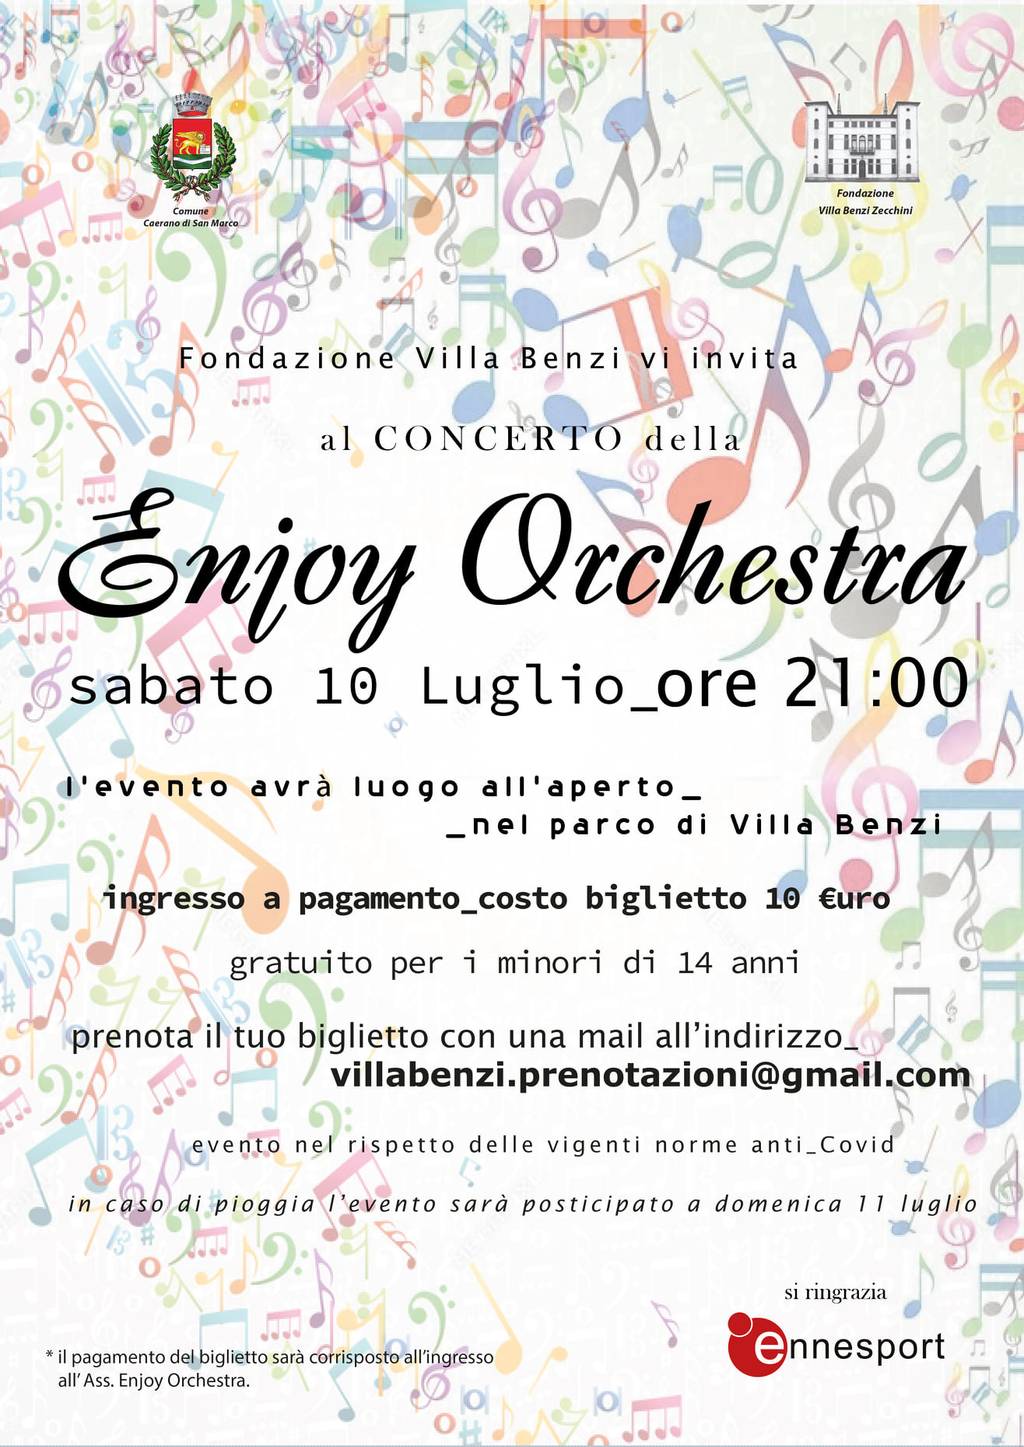 Enjoy Orchestra in concert